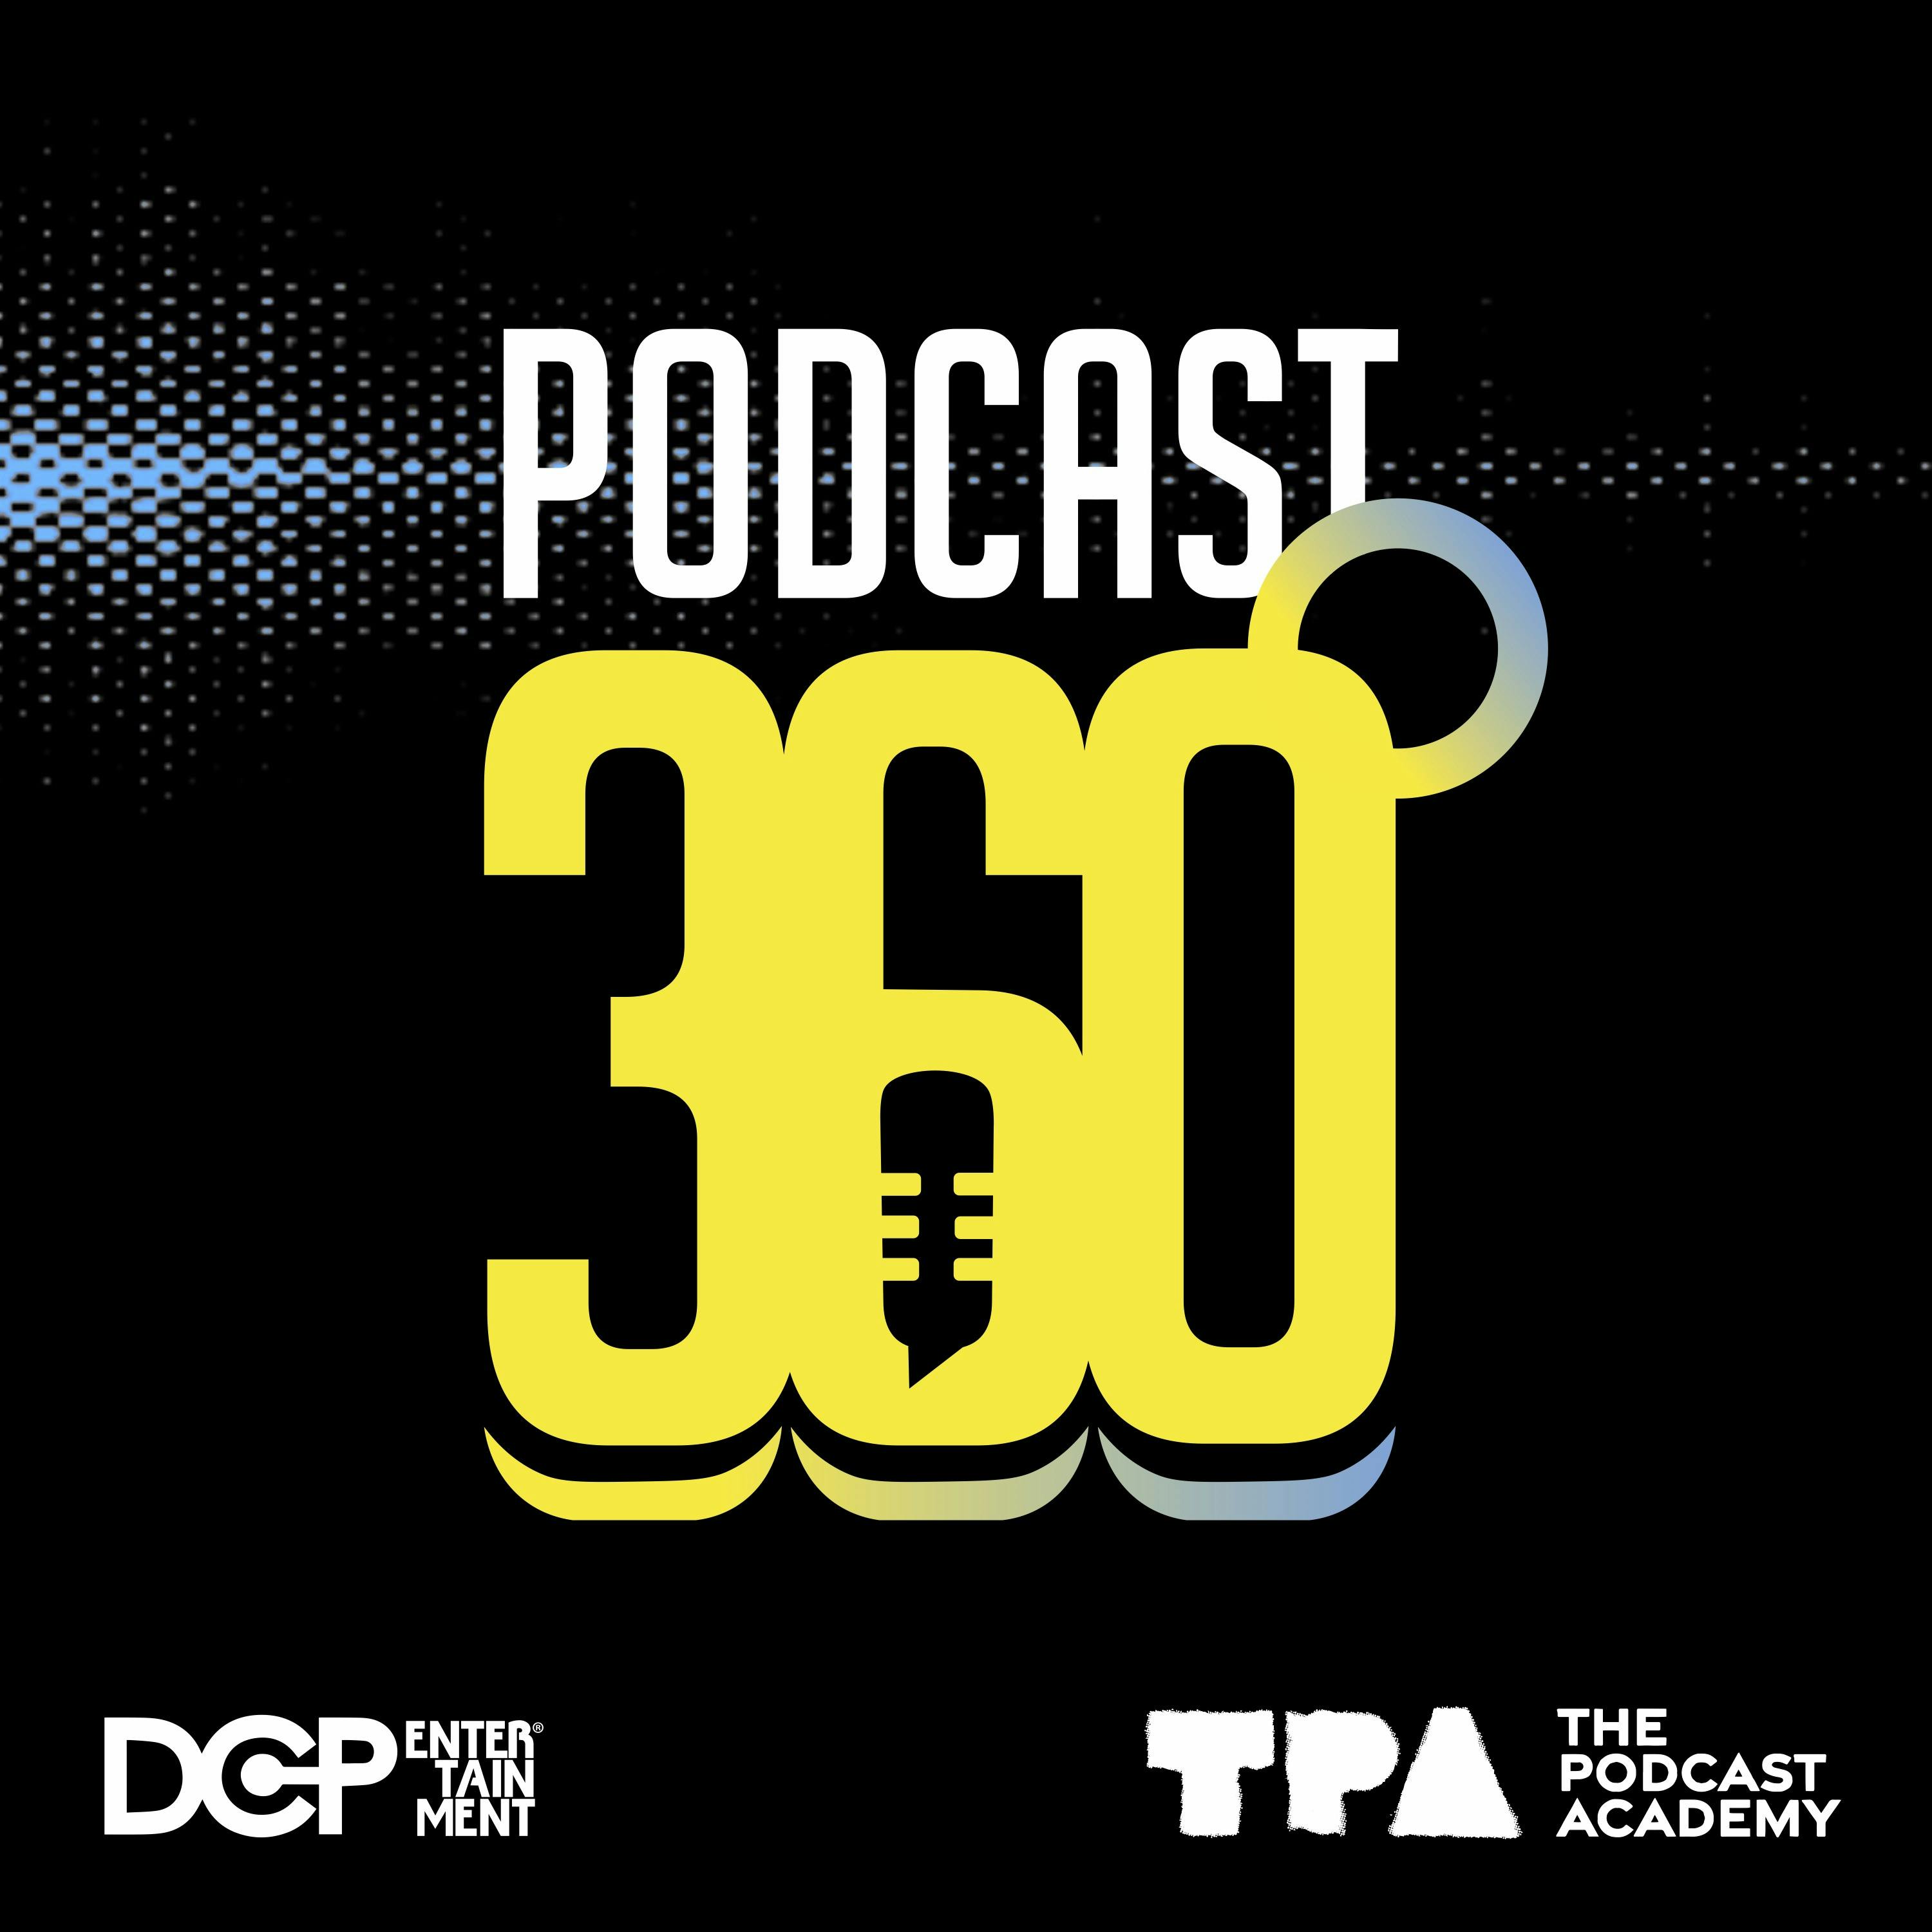 Podcast 360 Trailer